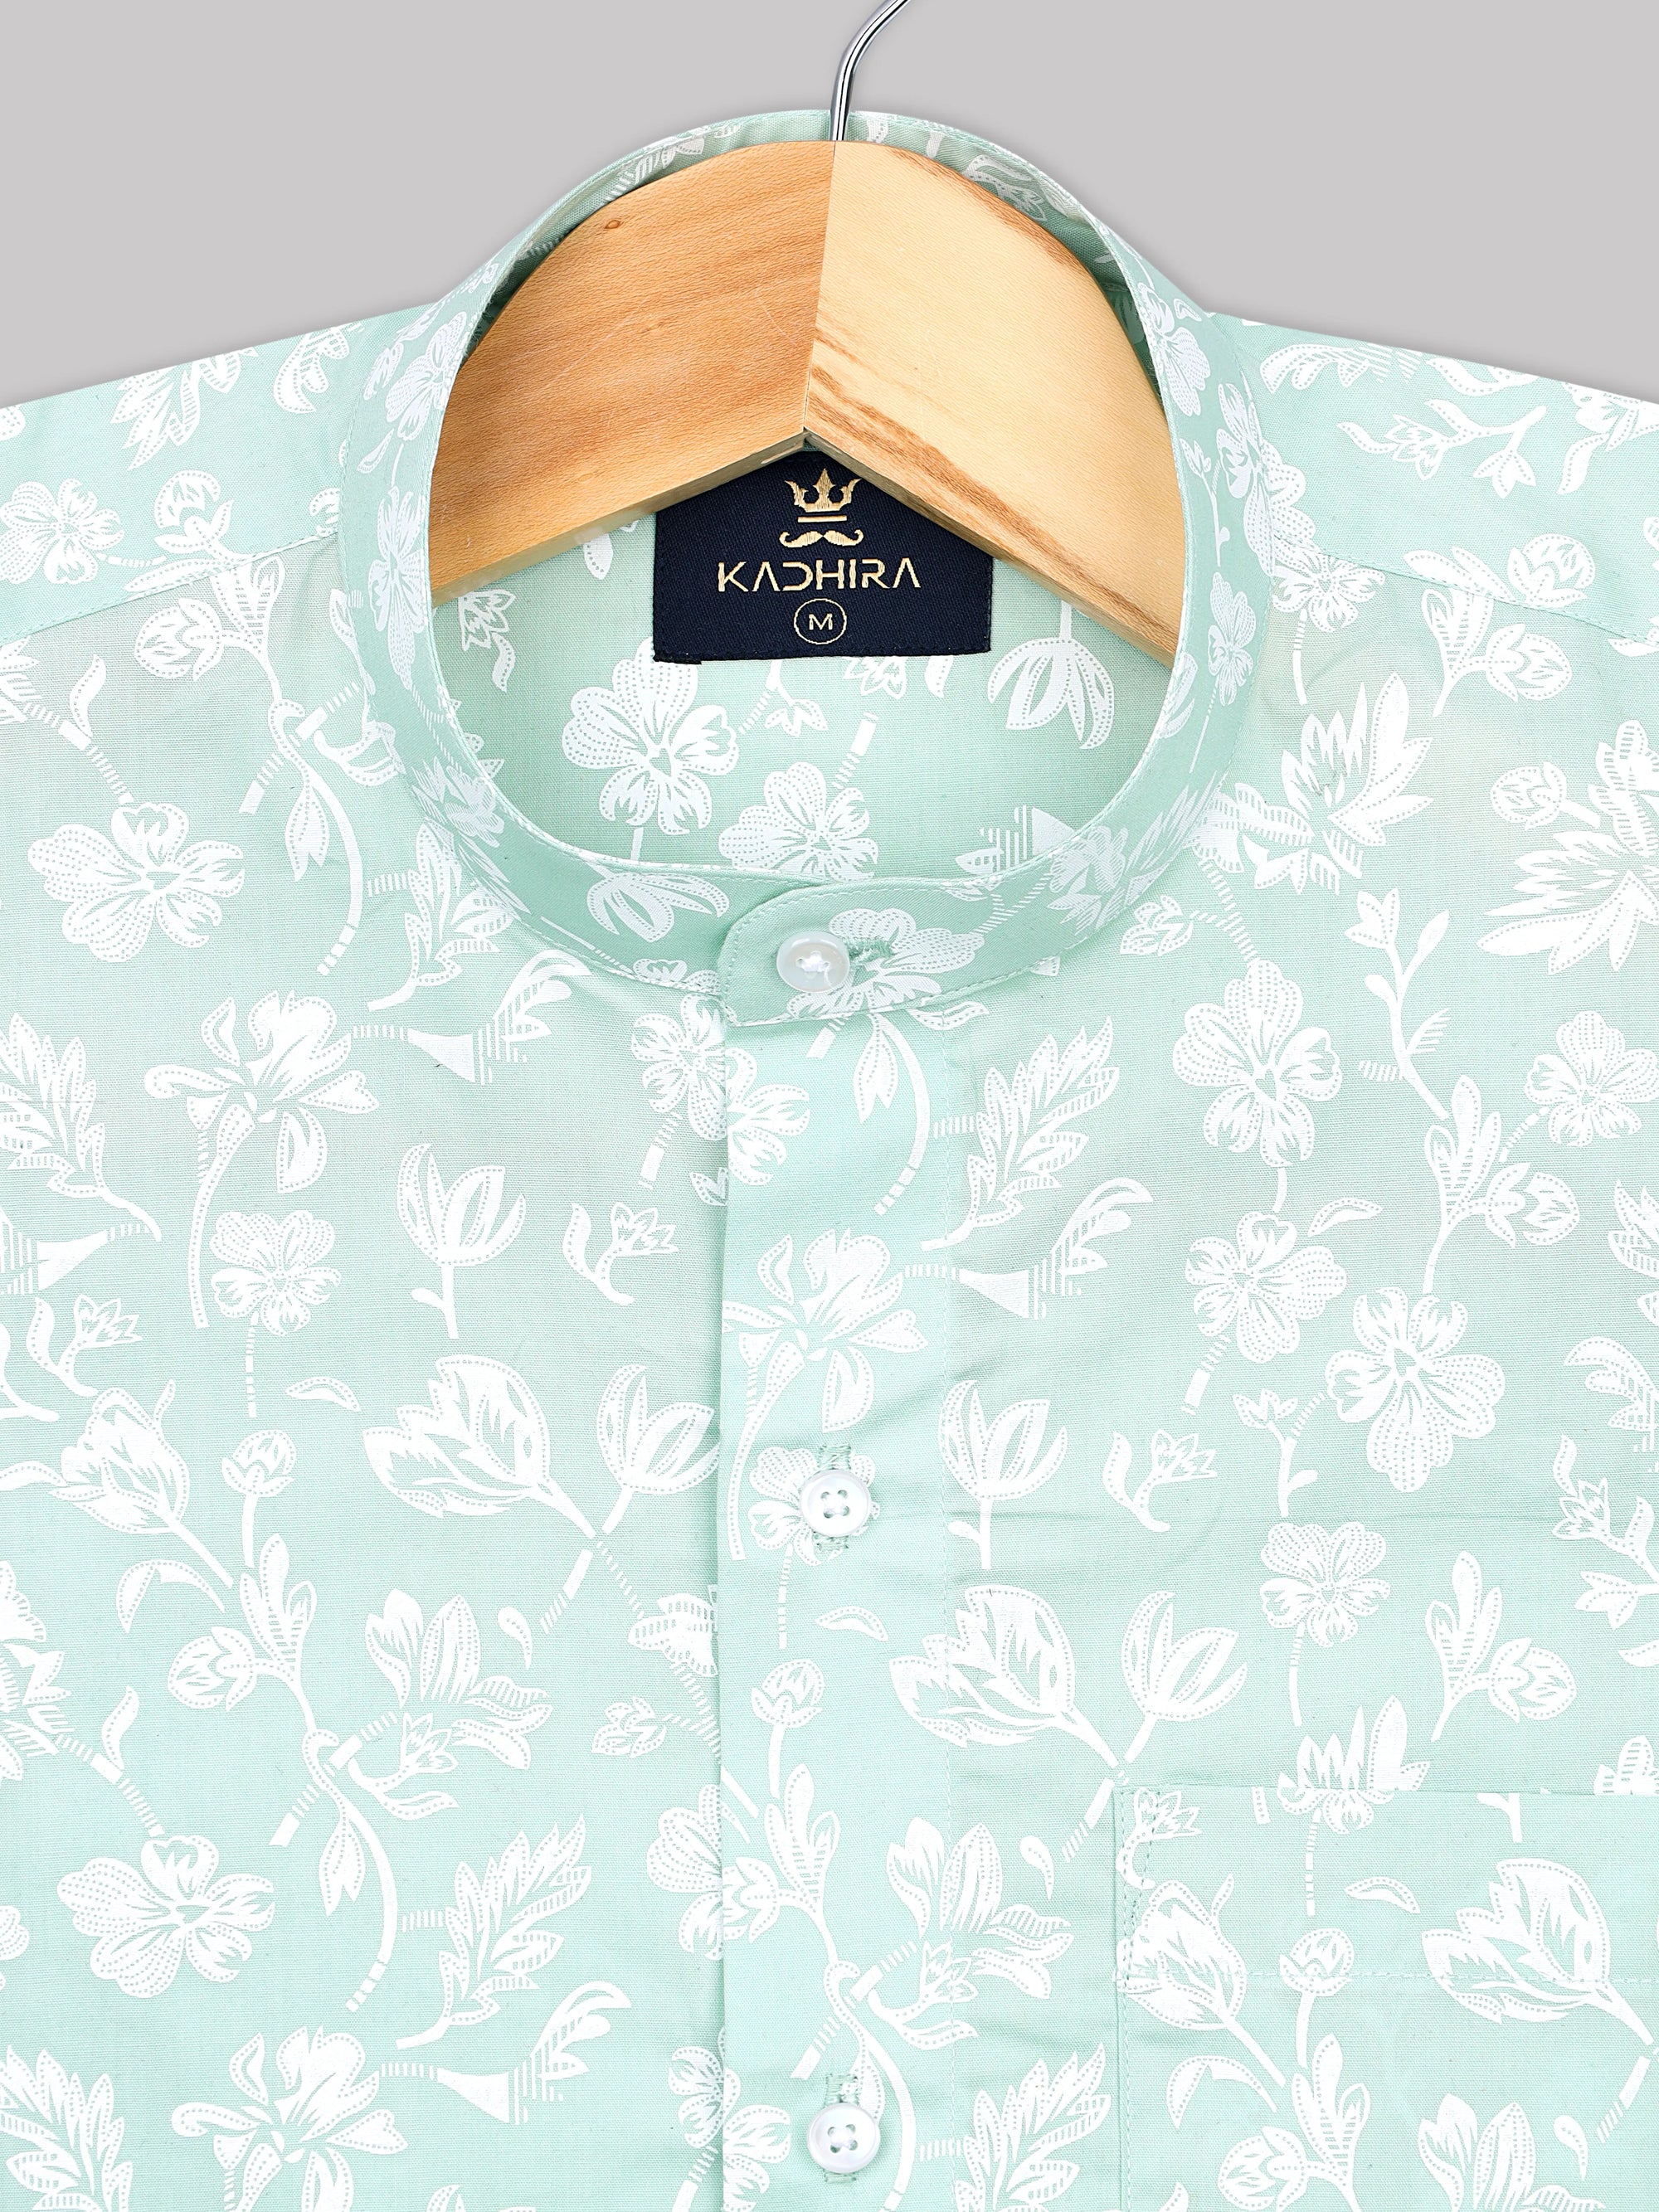 Celadon Green  With White Spring Floral Printed Premium Cotton Shirt